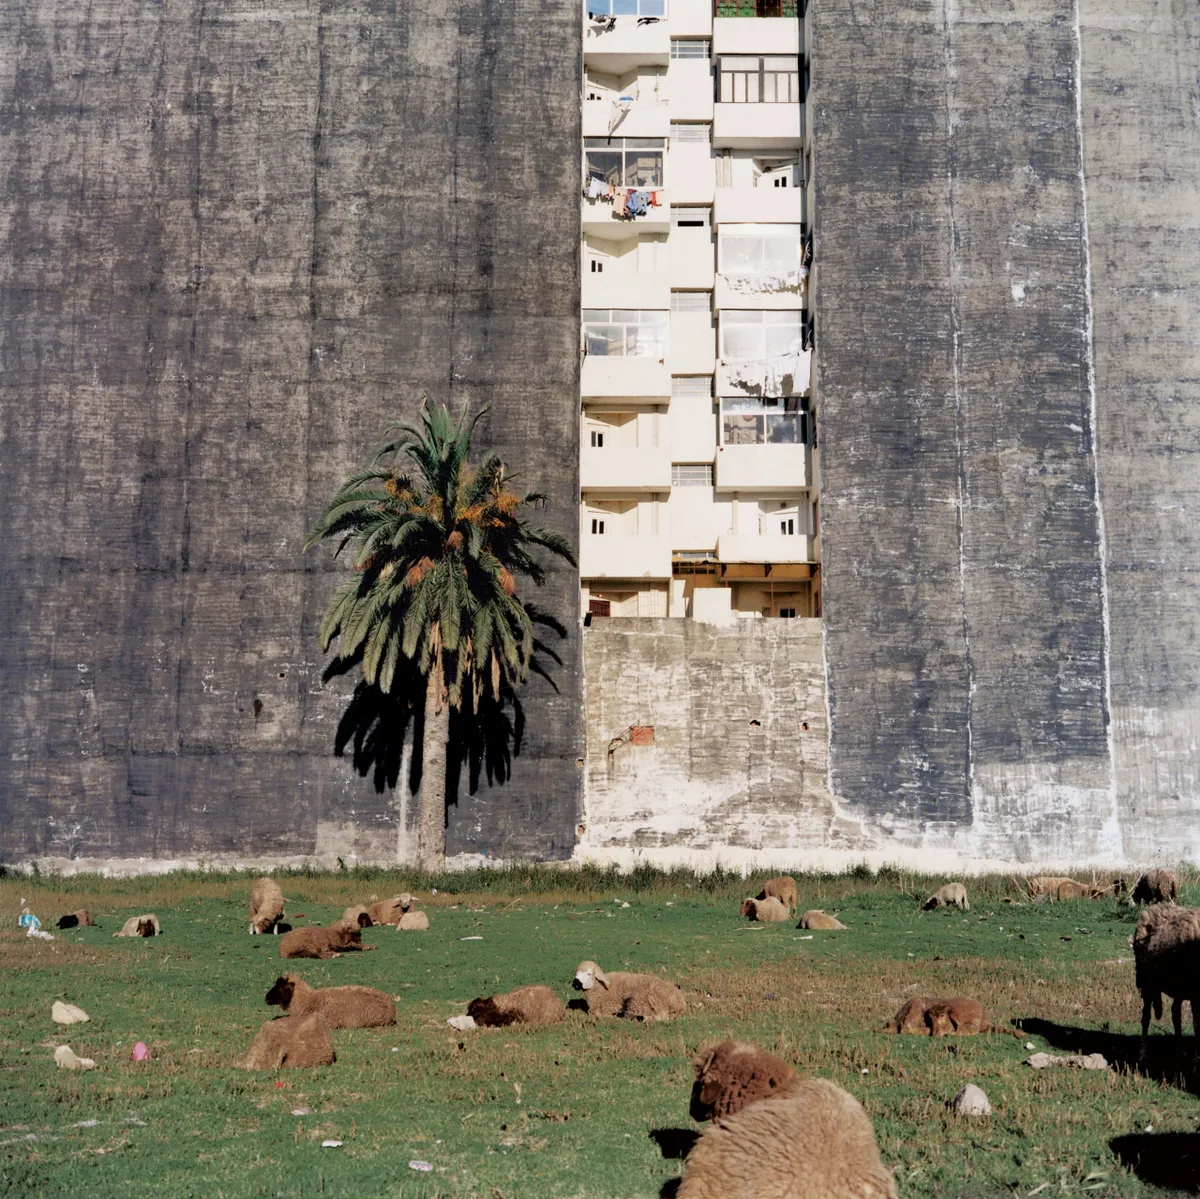 Yto Barrada Terrain Vague – Tanger (Vacant Lot – Tangier), 2001. Chromogenic print.